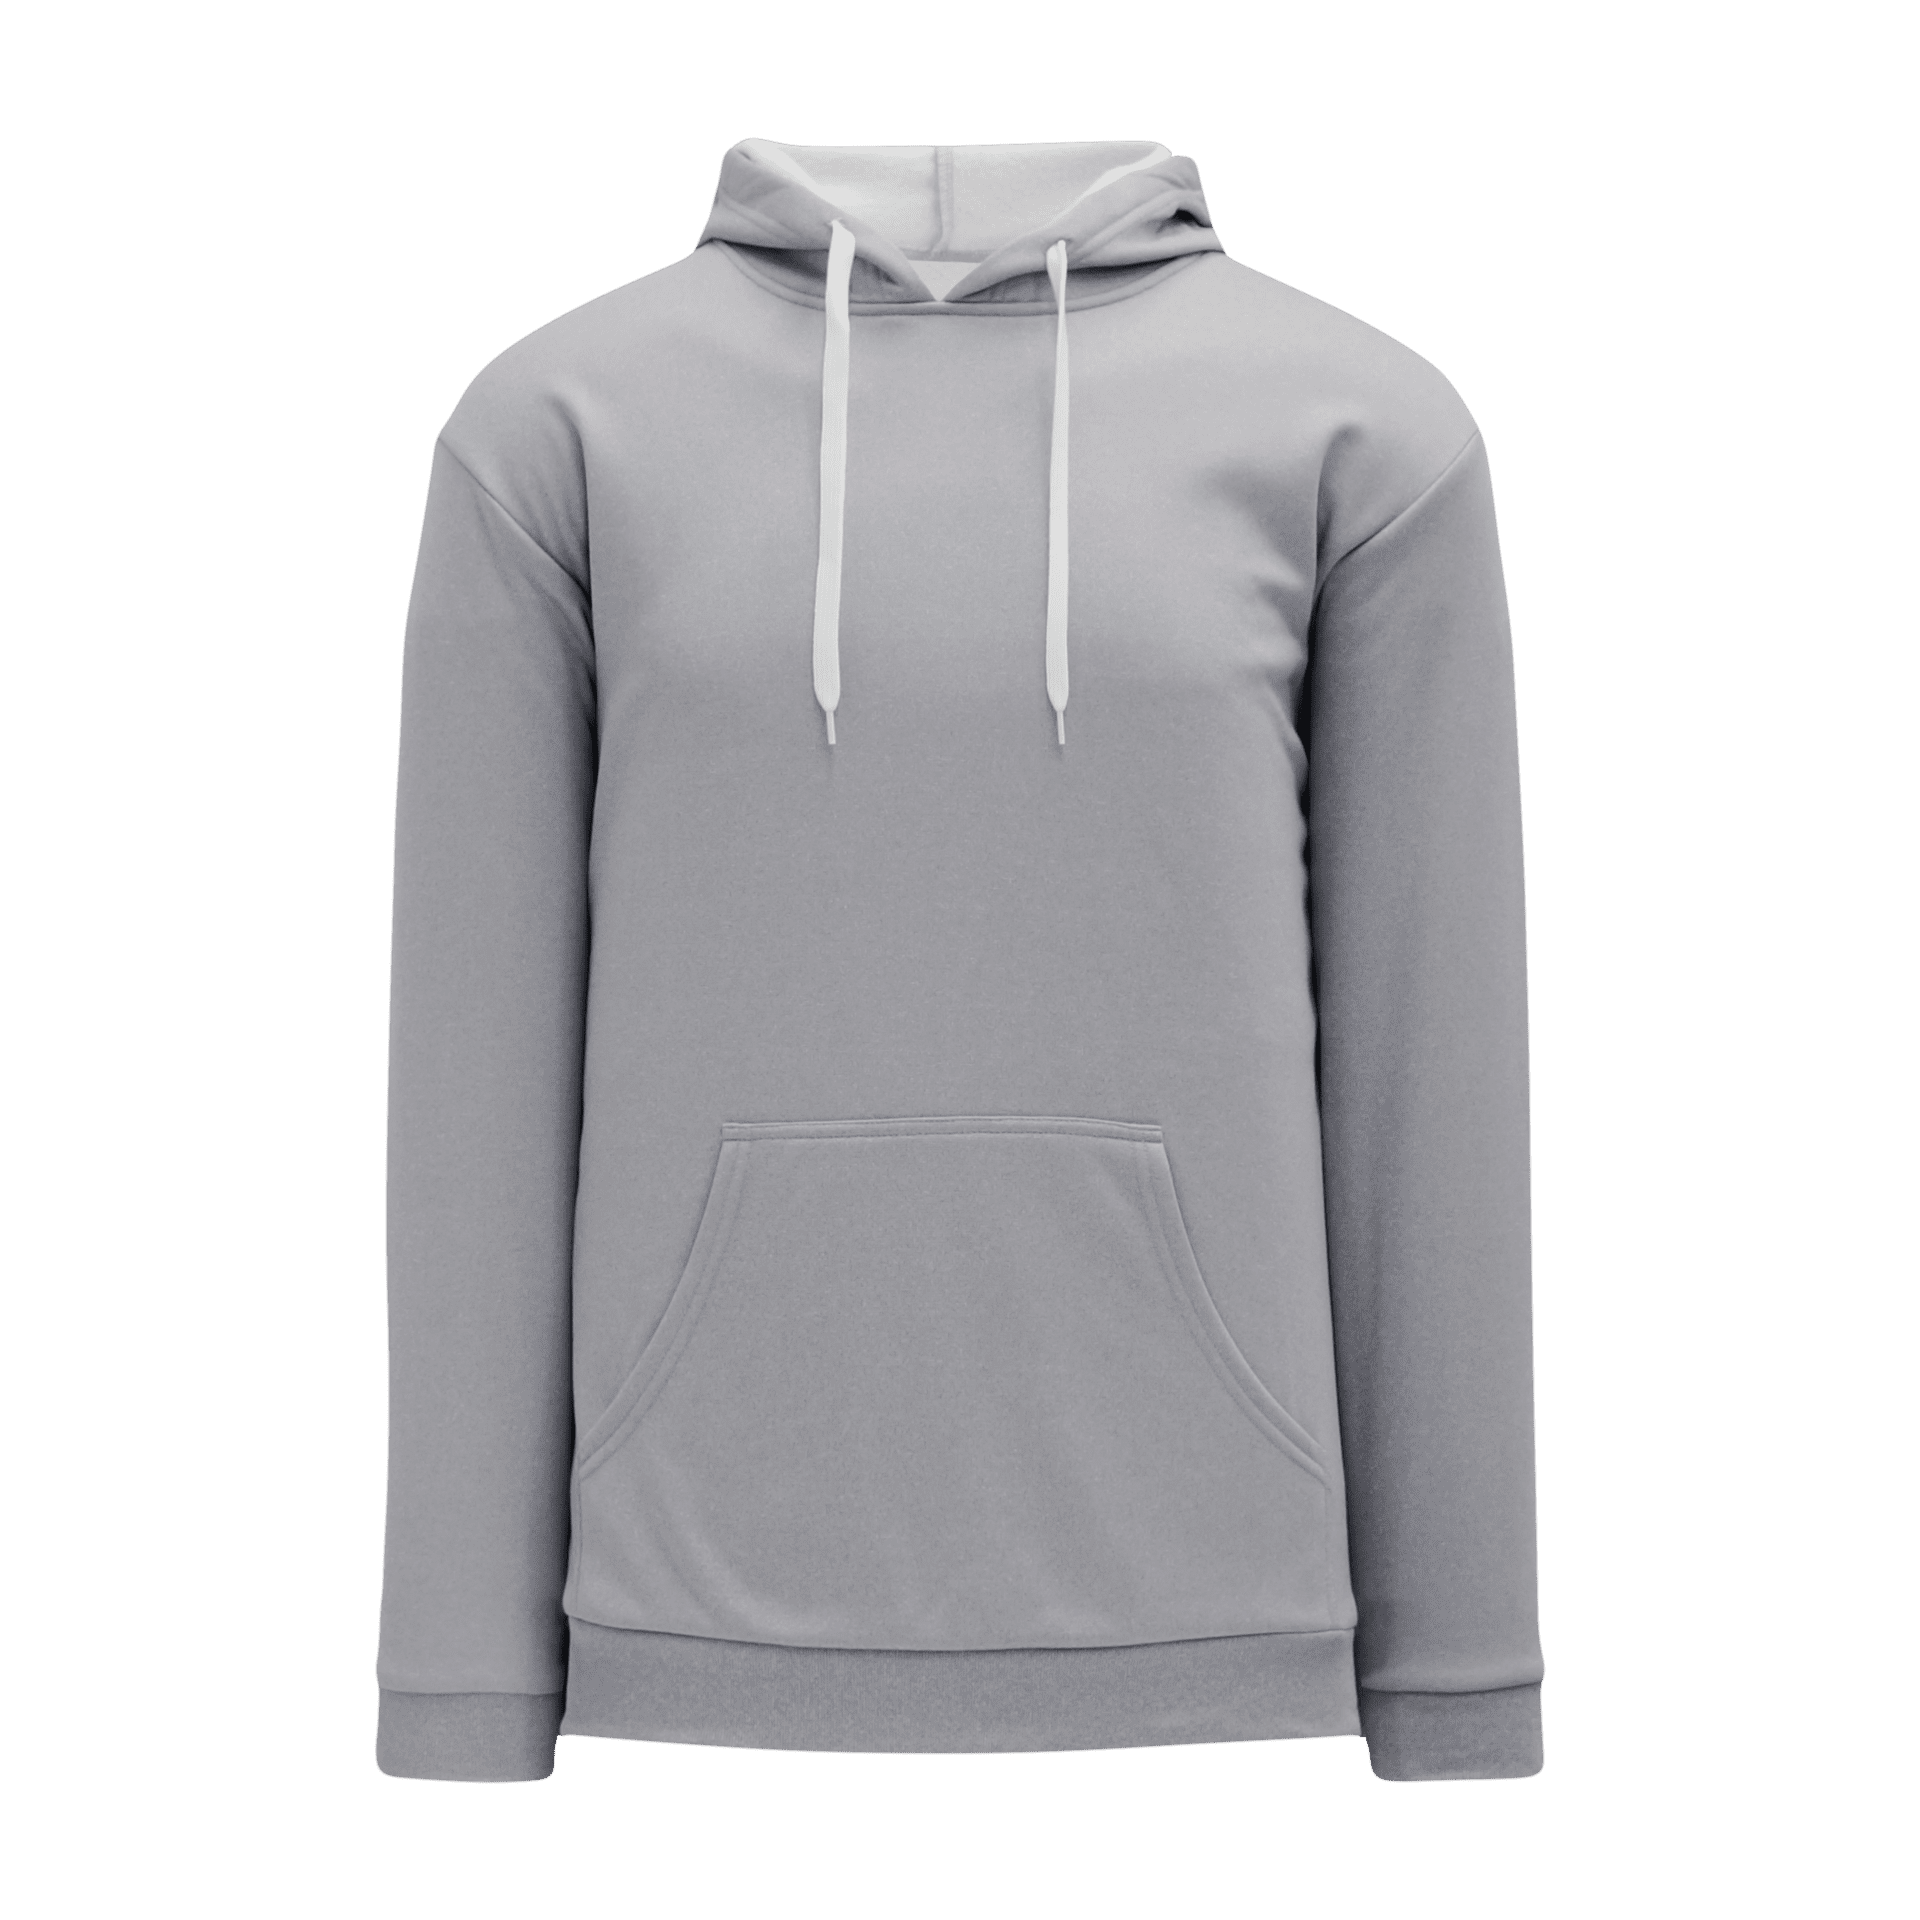 ATHLETIC KNIT Polyfleece Hooded Sweatshirt #A1835 Heather Grey